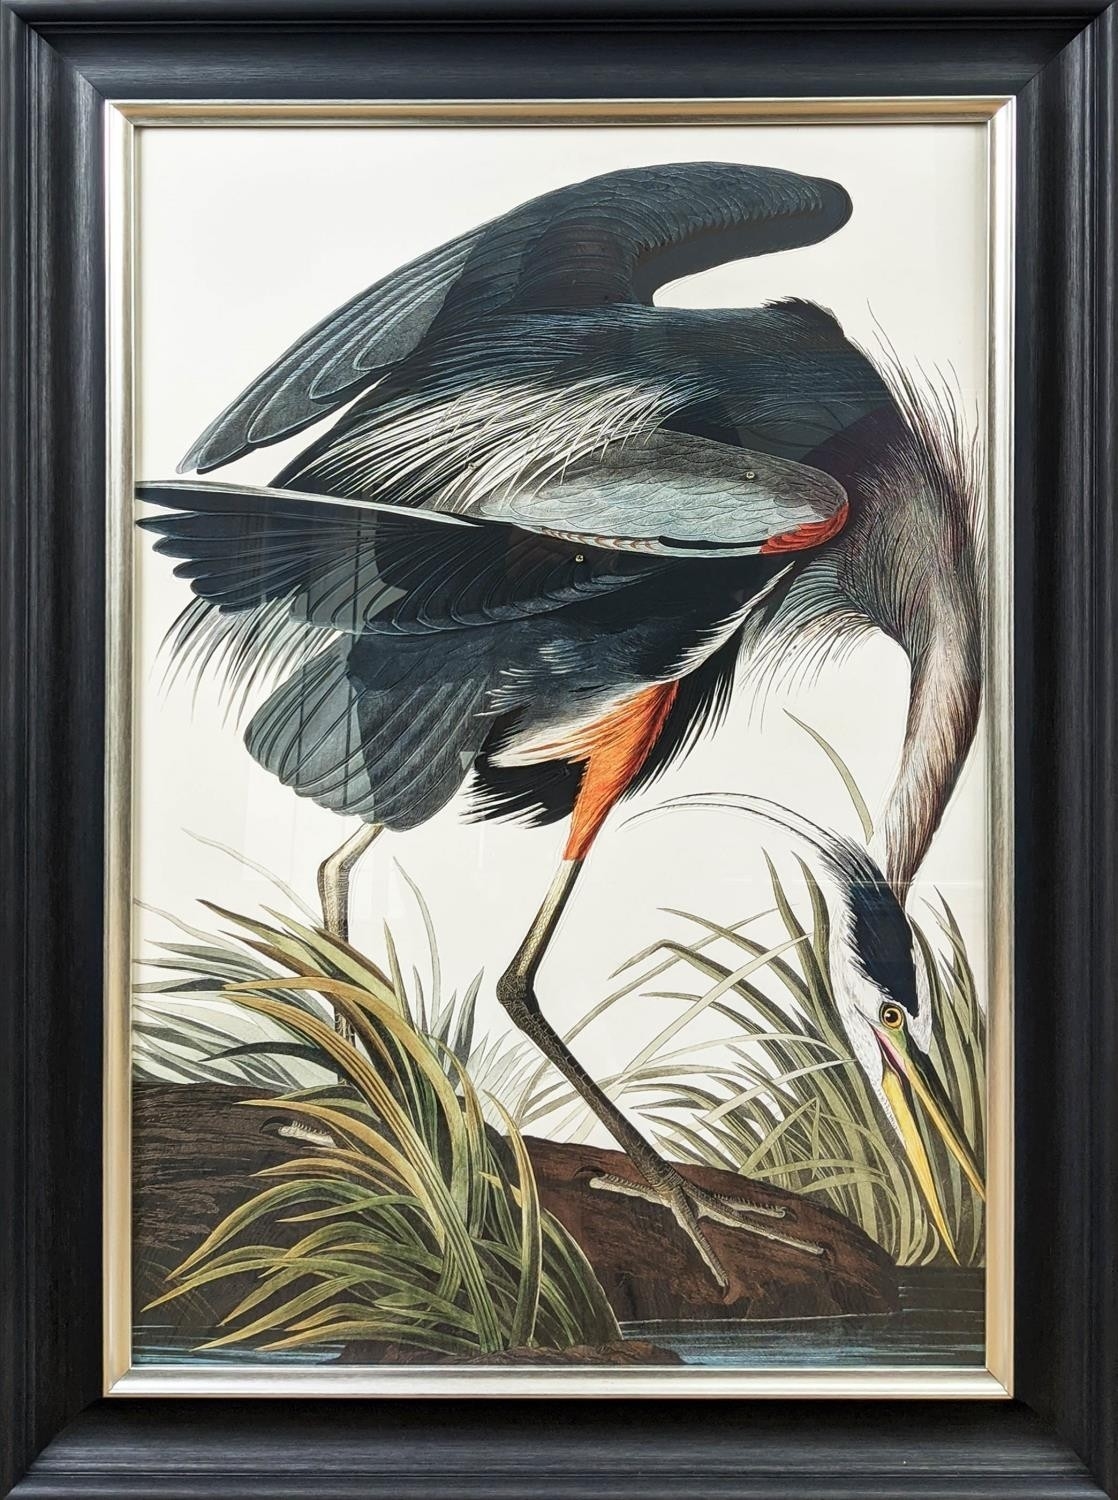 AFTER JOHN JAMES AUBUDON , in a black frame by John James Audubon